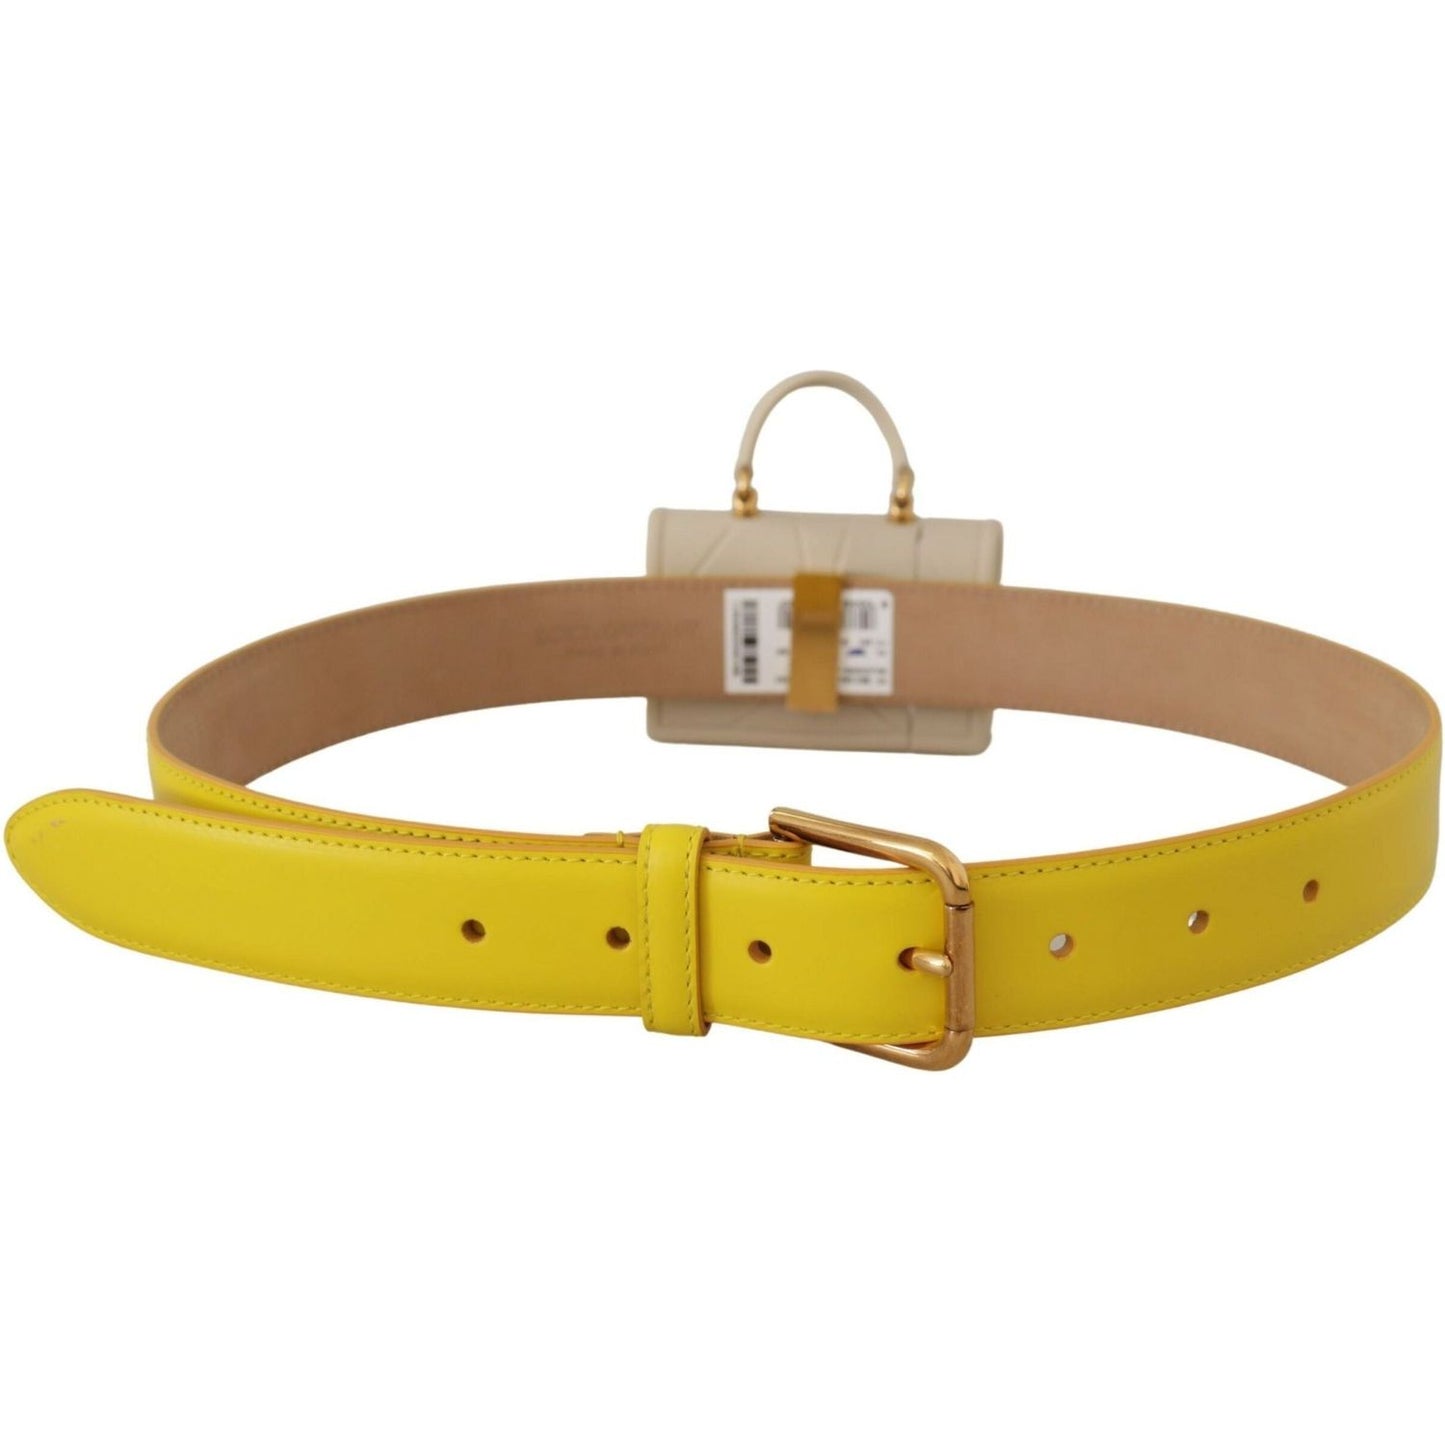 Dolce & Gabbana Chic Yellow Leather Belt with Headphone Case yellow-leather-devotion-heart-micro-bag-headphones-belt IMG_8656-1-scaled-7e74cae1-4c0.jpg